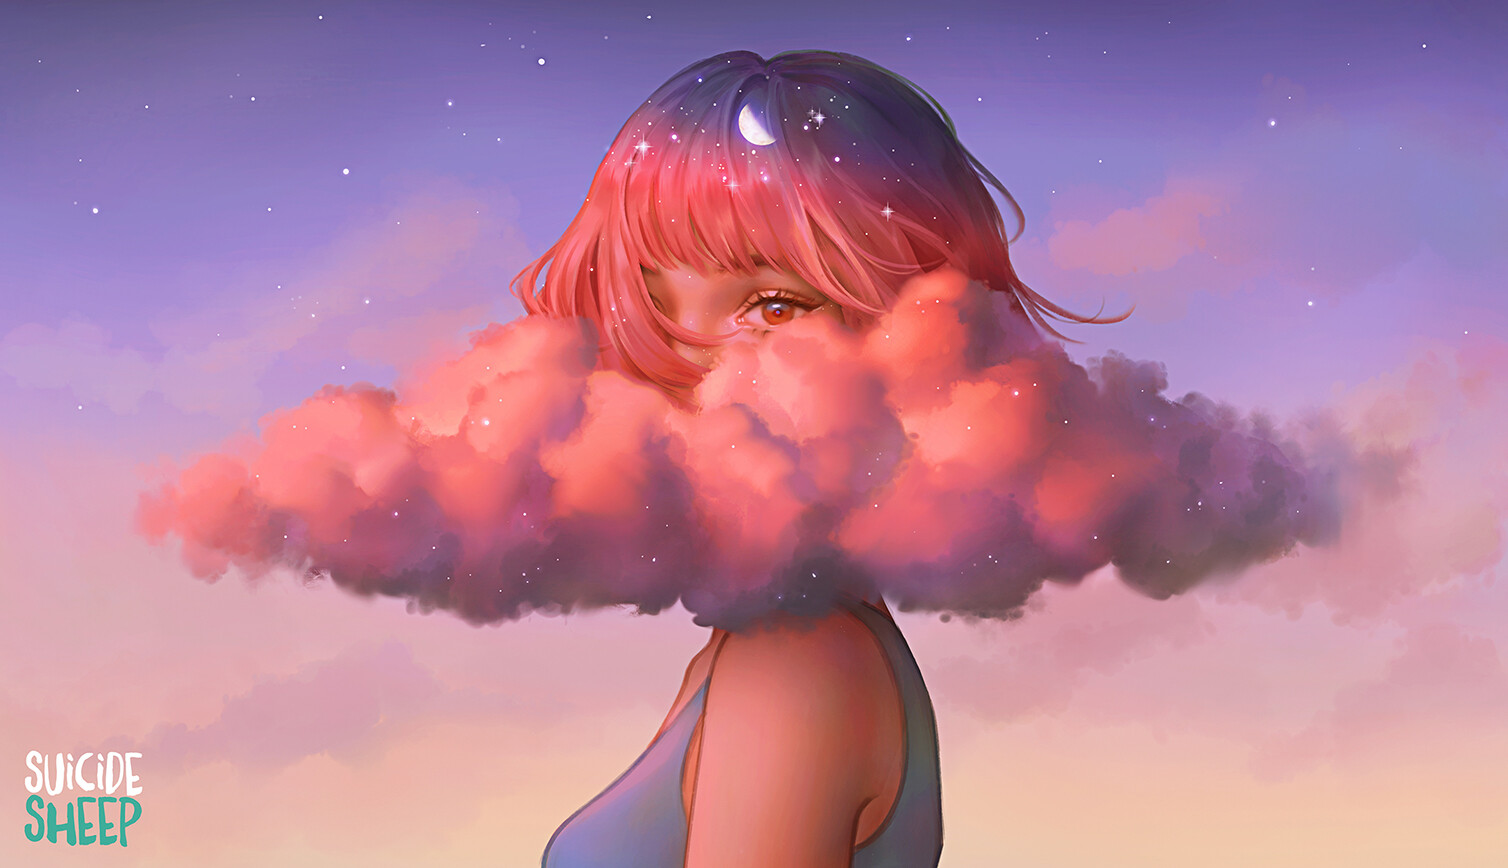 Artwork Women Clouds Space Karmen Loh Fantasy Art Pink Clouds Half Moon Stars Pink Hair 2D Short Hai 1508x868